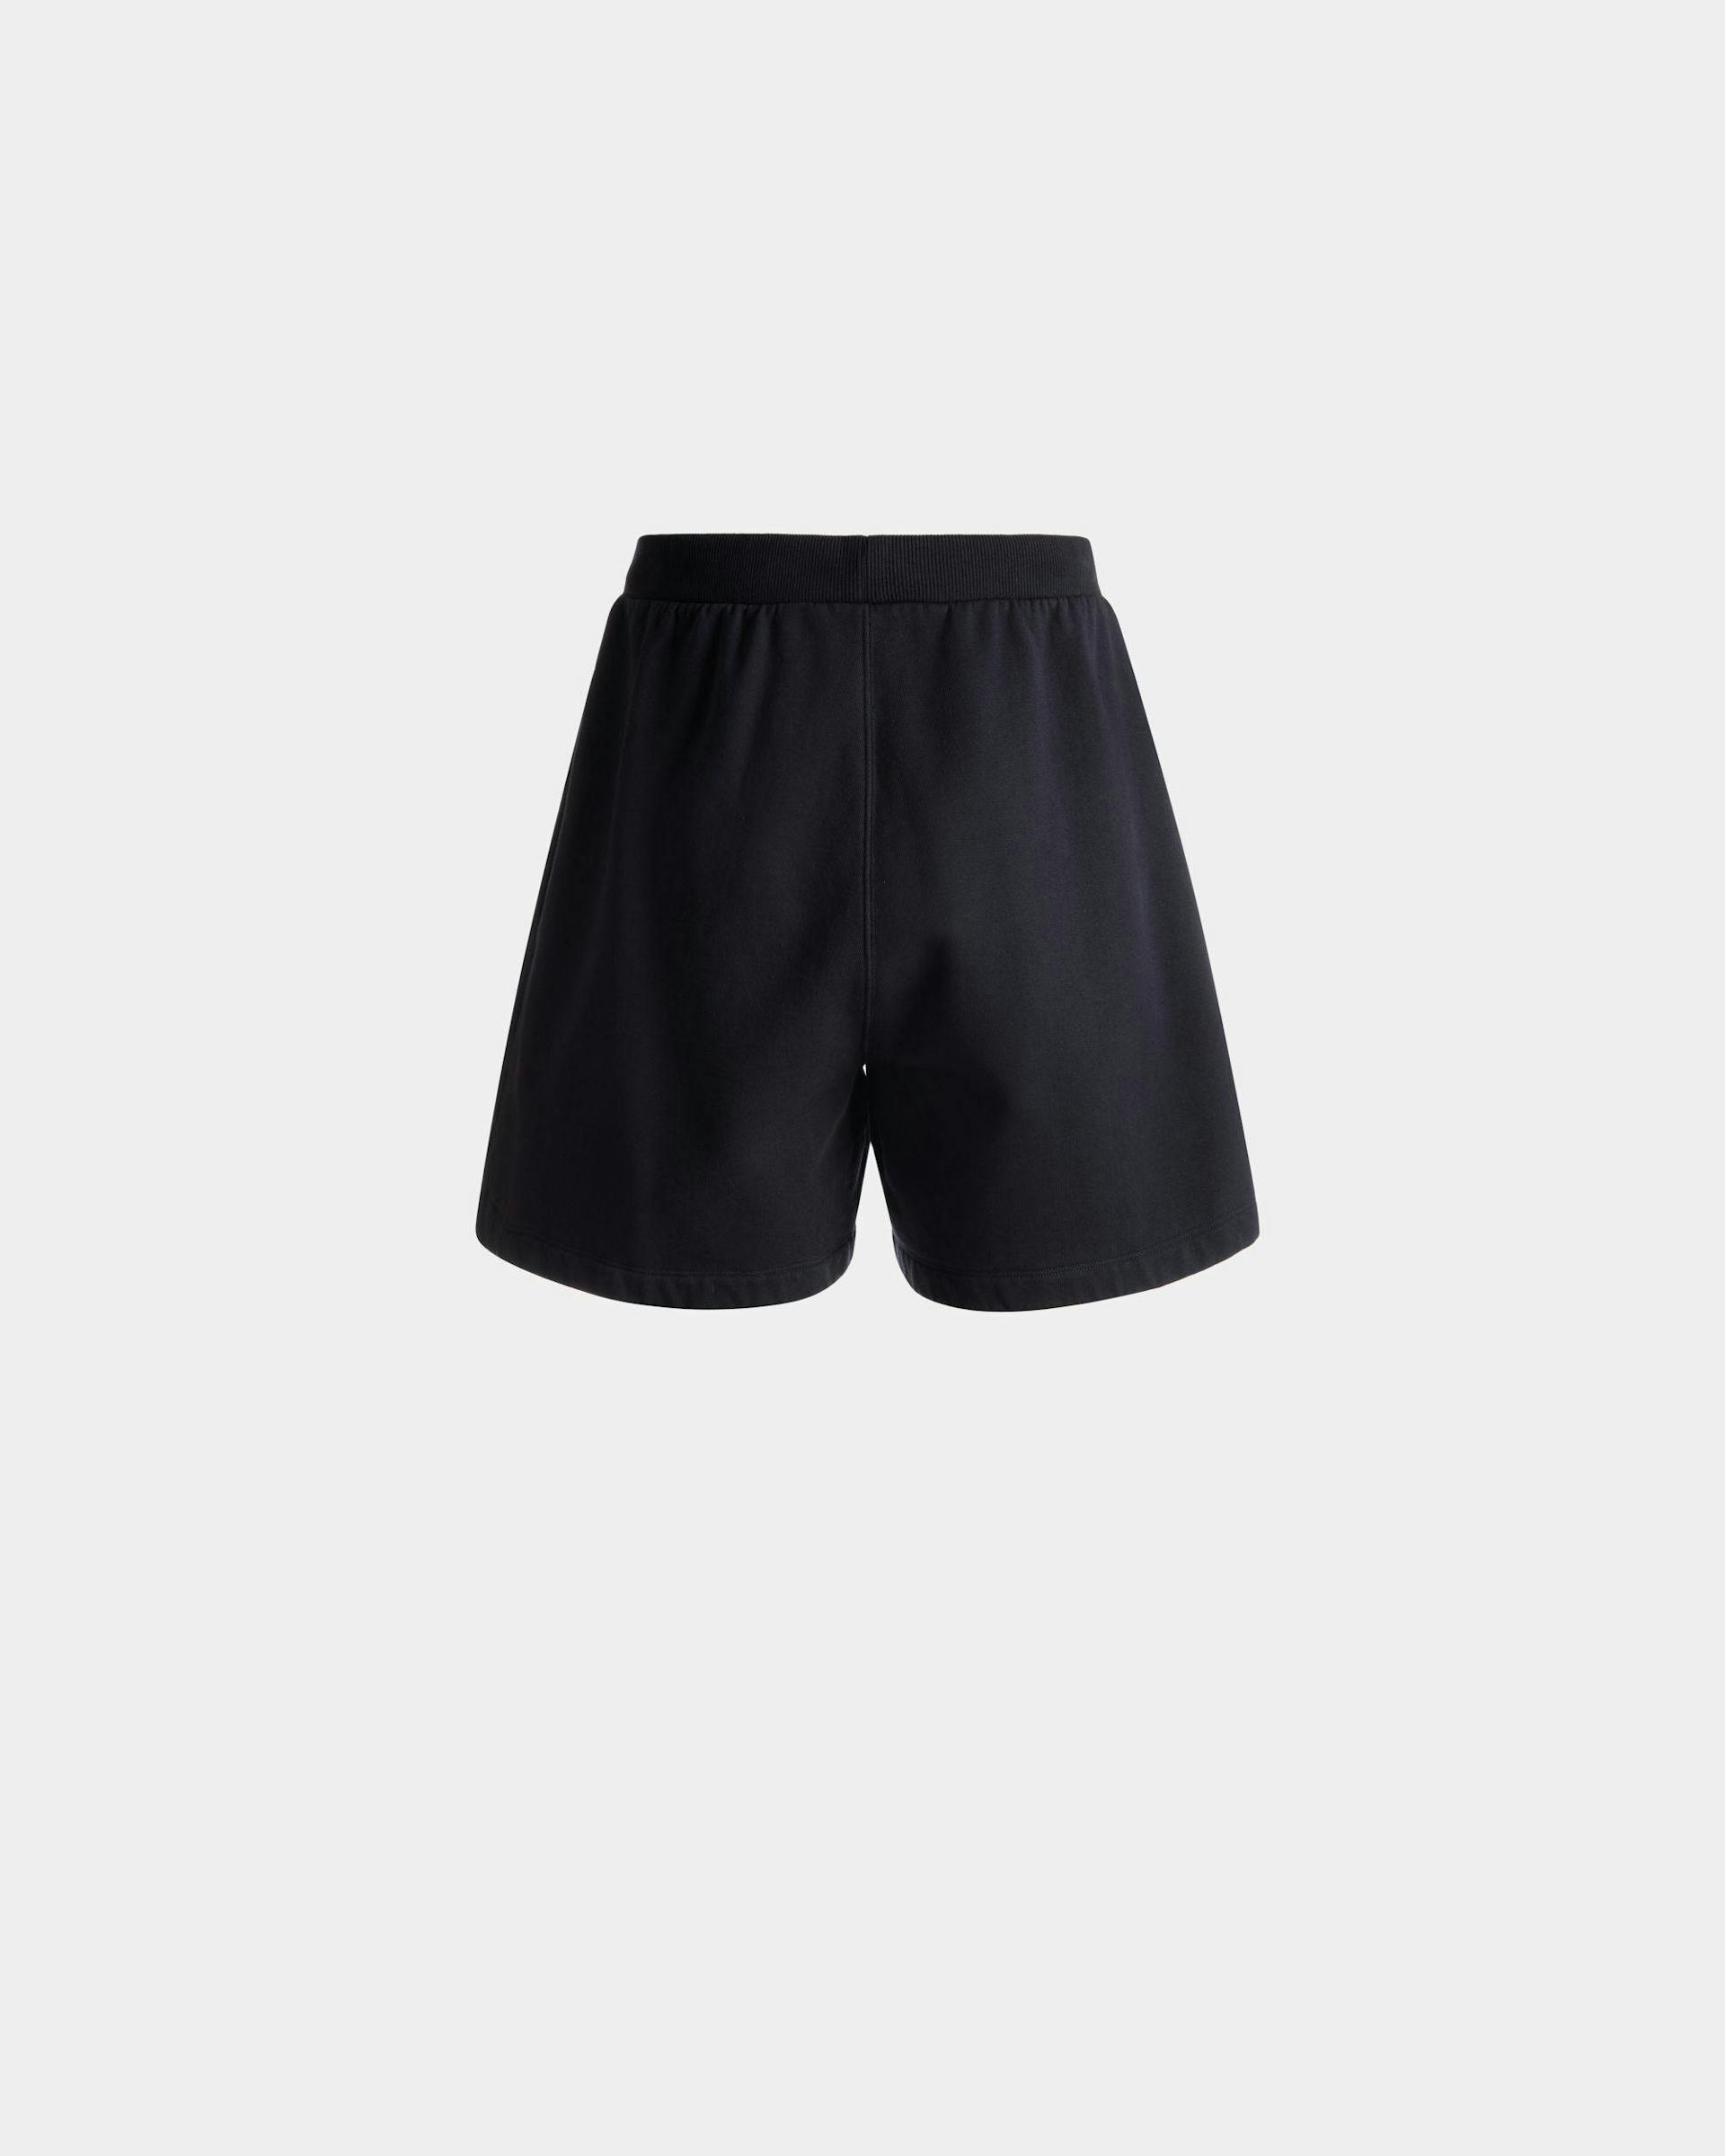 Men's Sweatpant Shorts In Midnight Cotton | Bally | Still Life Back